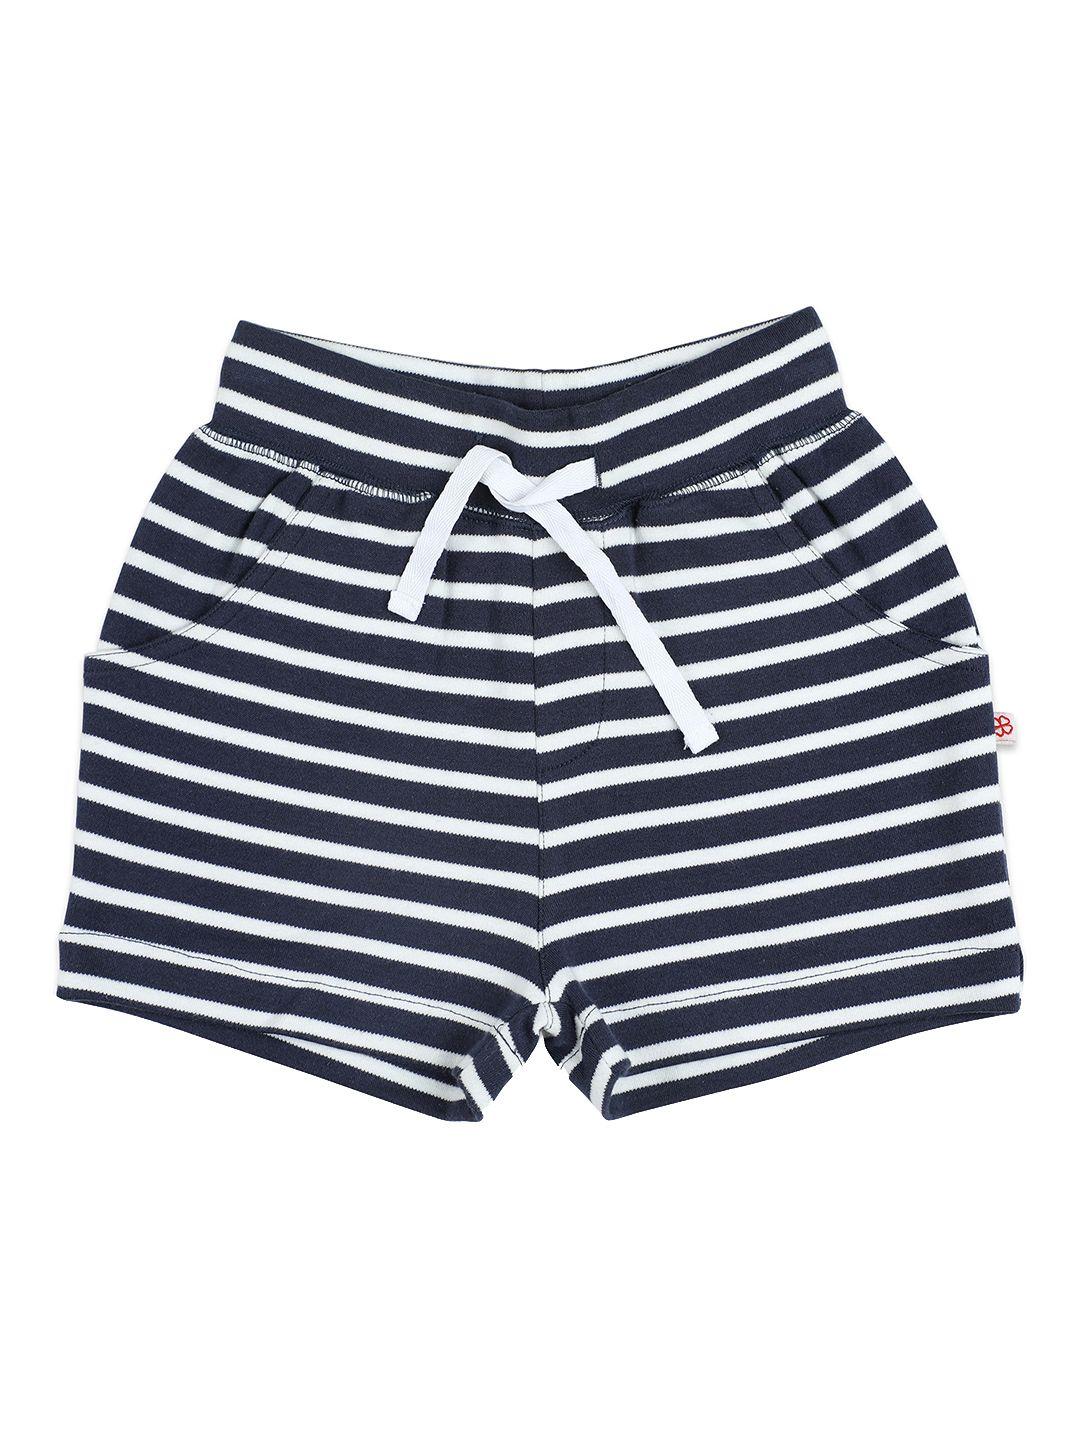 greendigo boys navy blue striped striped shorts